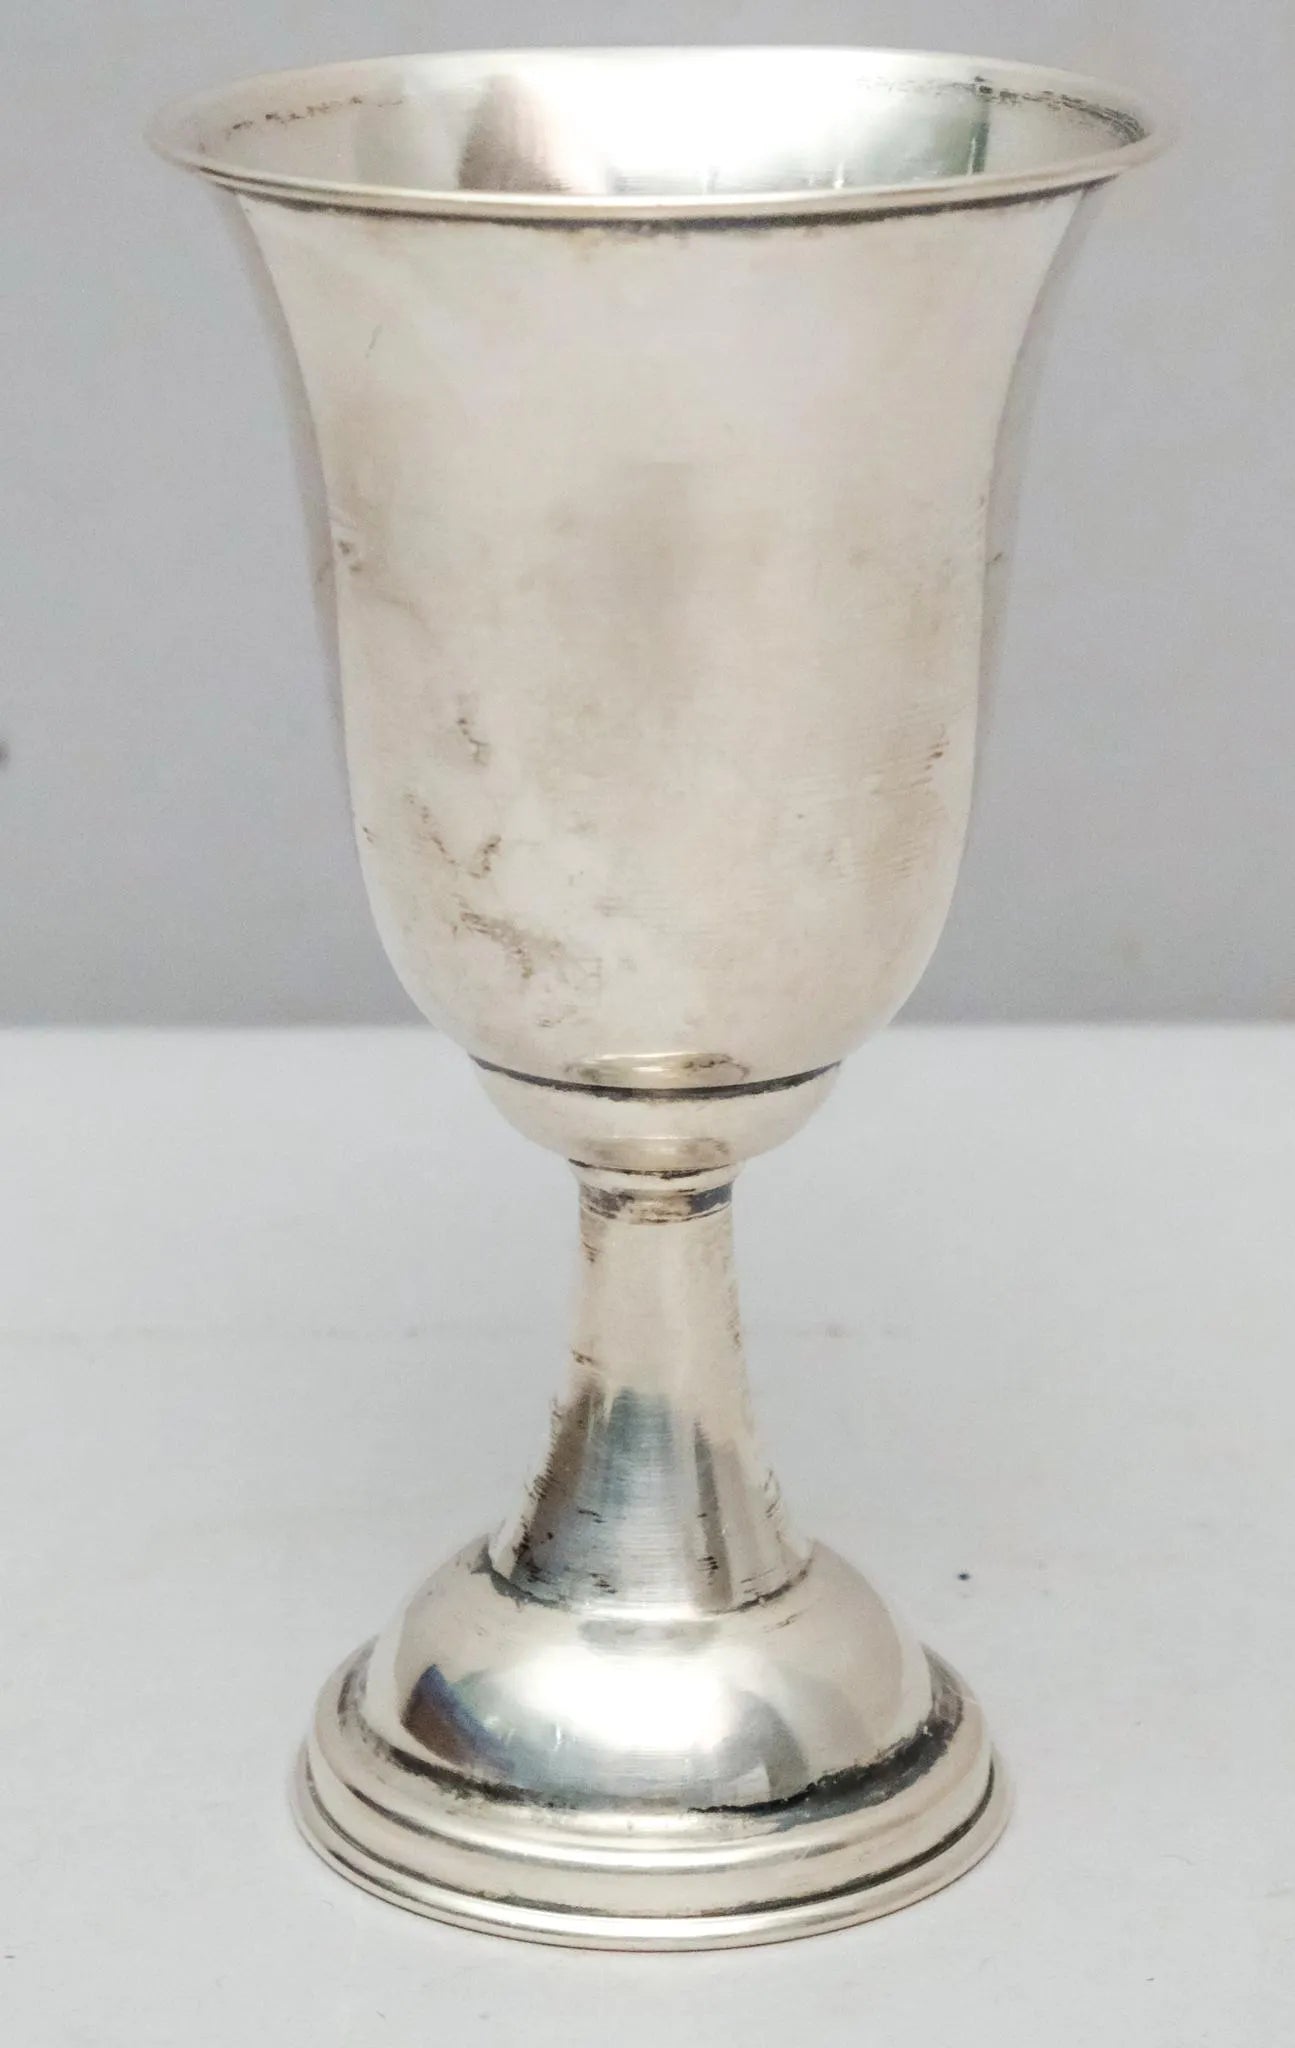 Antique Silver Kiddush Cup